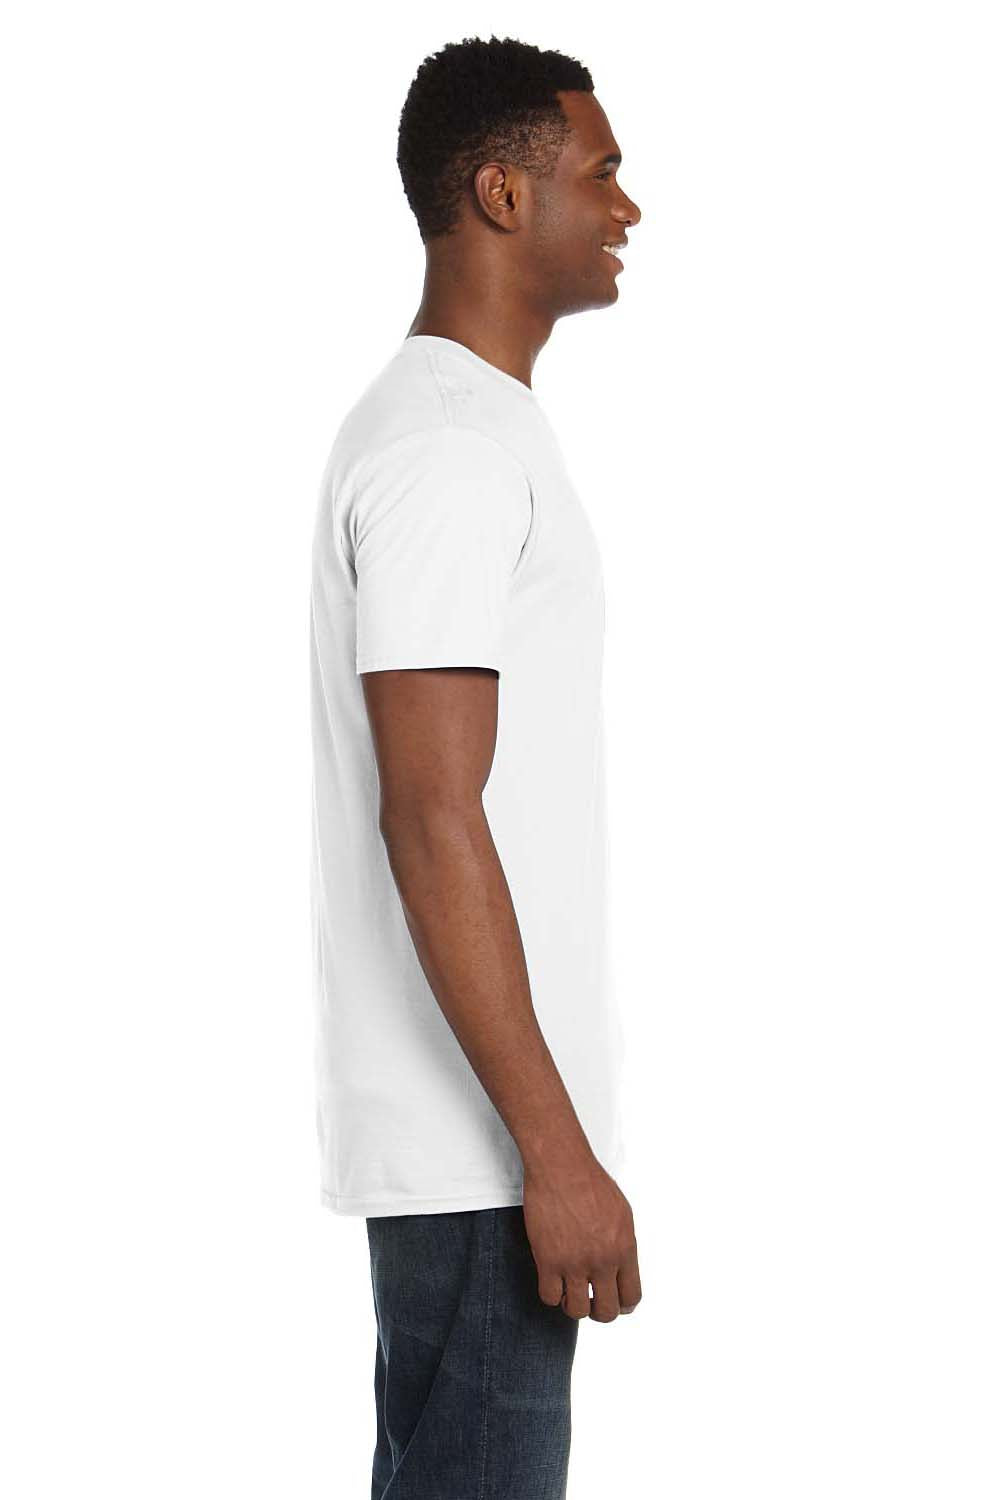 Hanes 4980 Mens Nano-T Short Sleeve Crewneck T-Shirt White Side